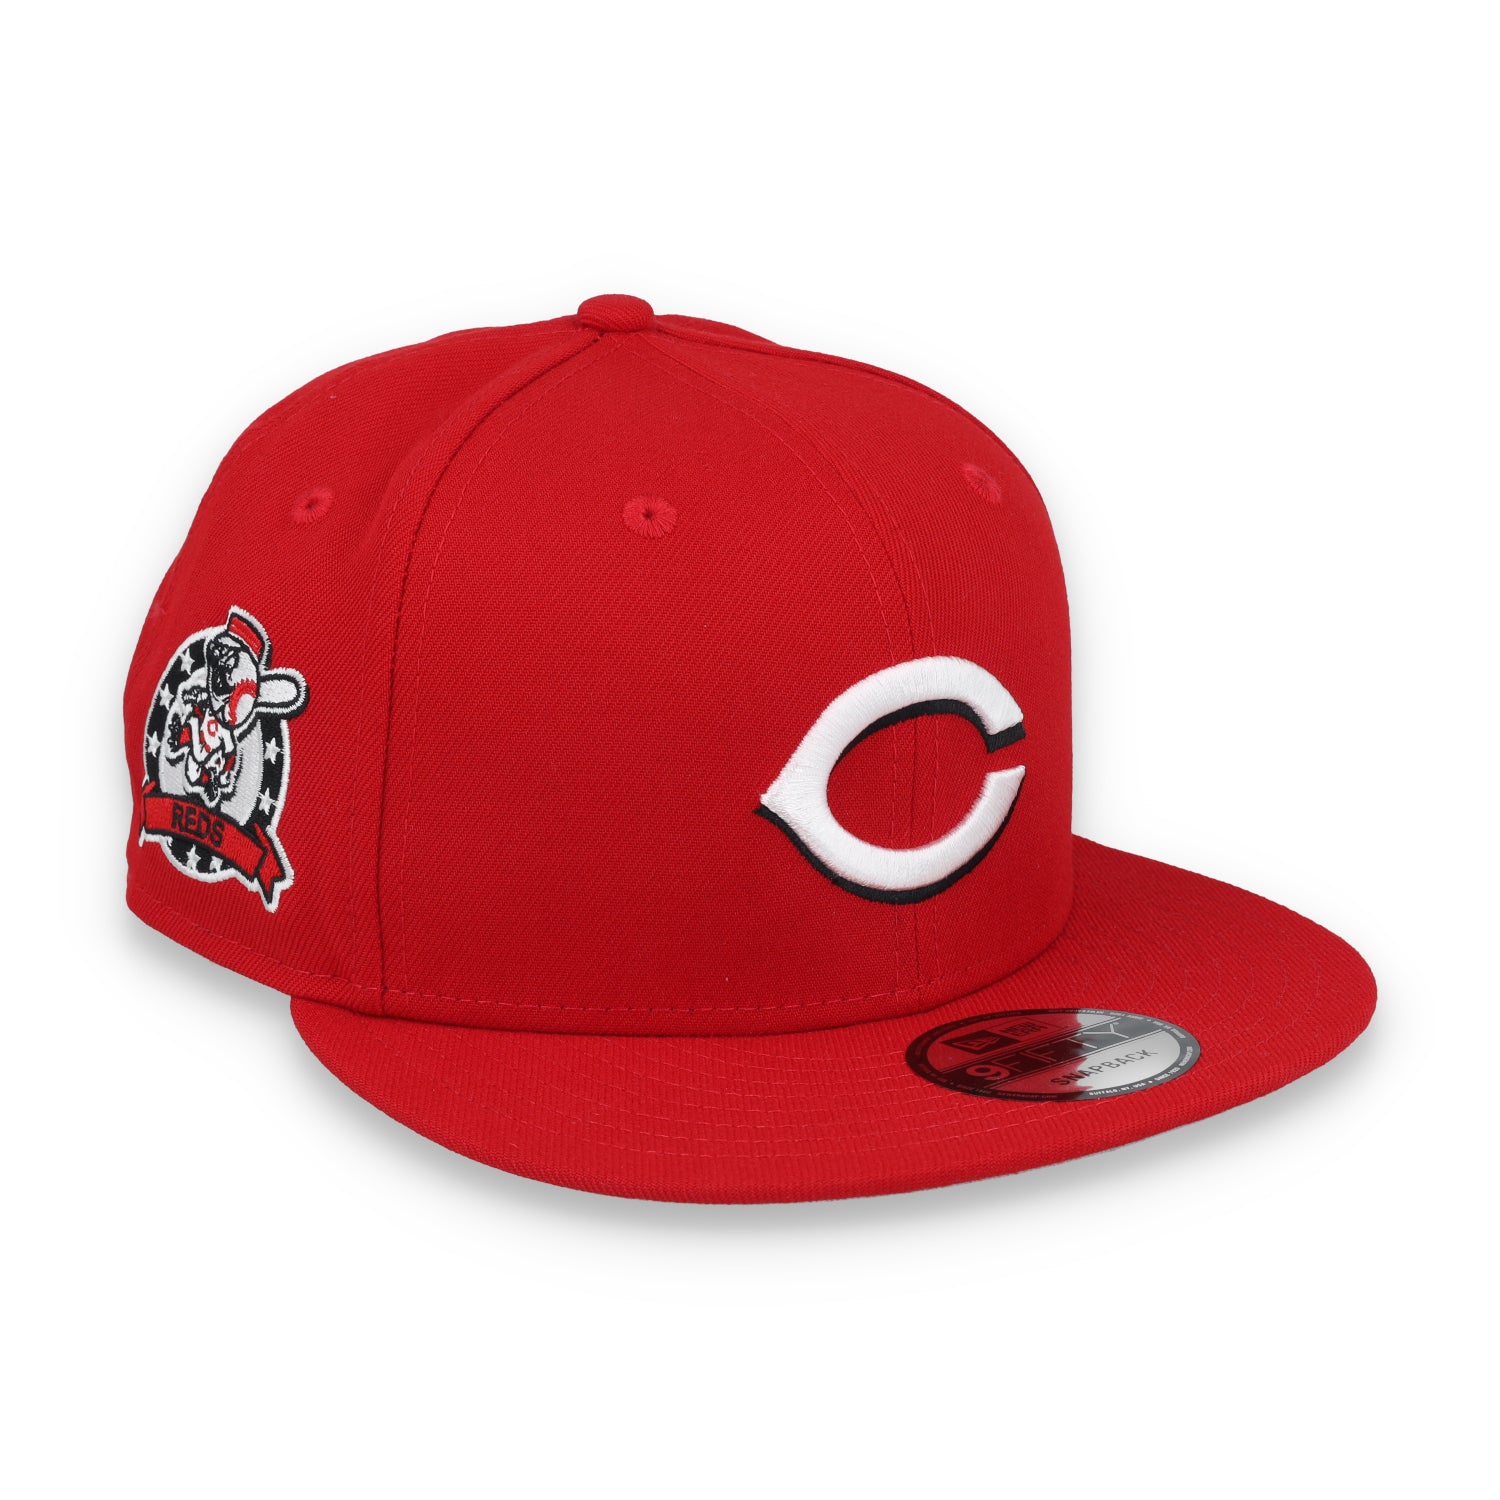 New Era Cincinnati Reds Patch E3 9FIFTY Snapback Hat